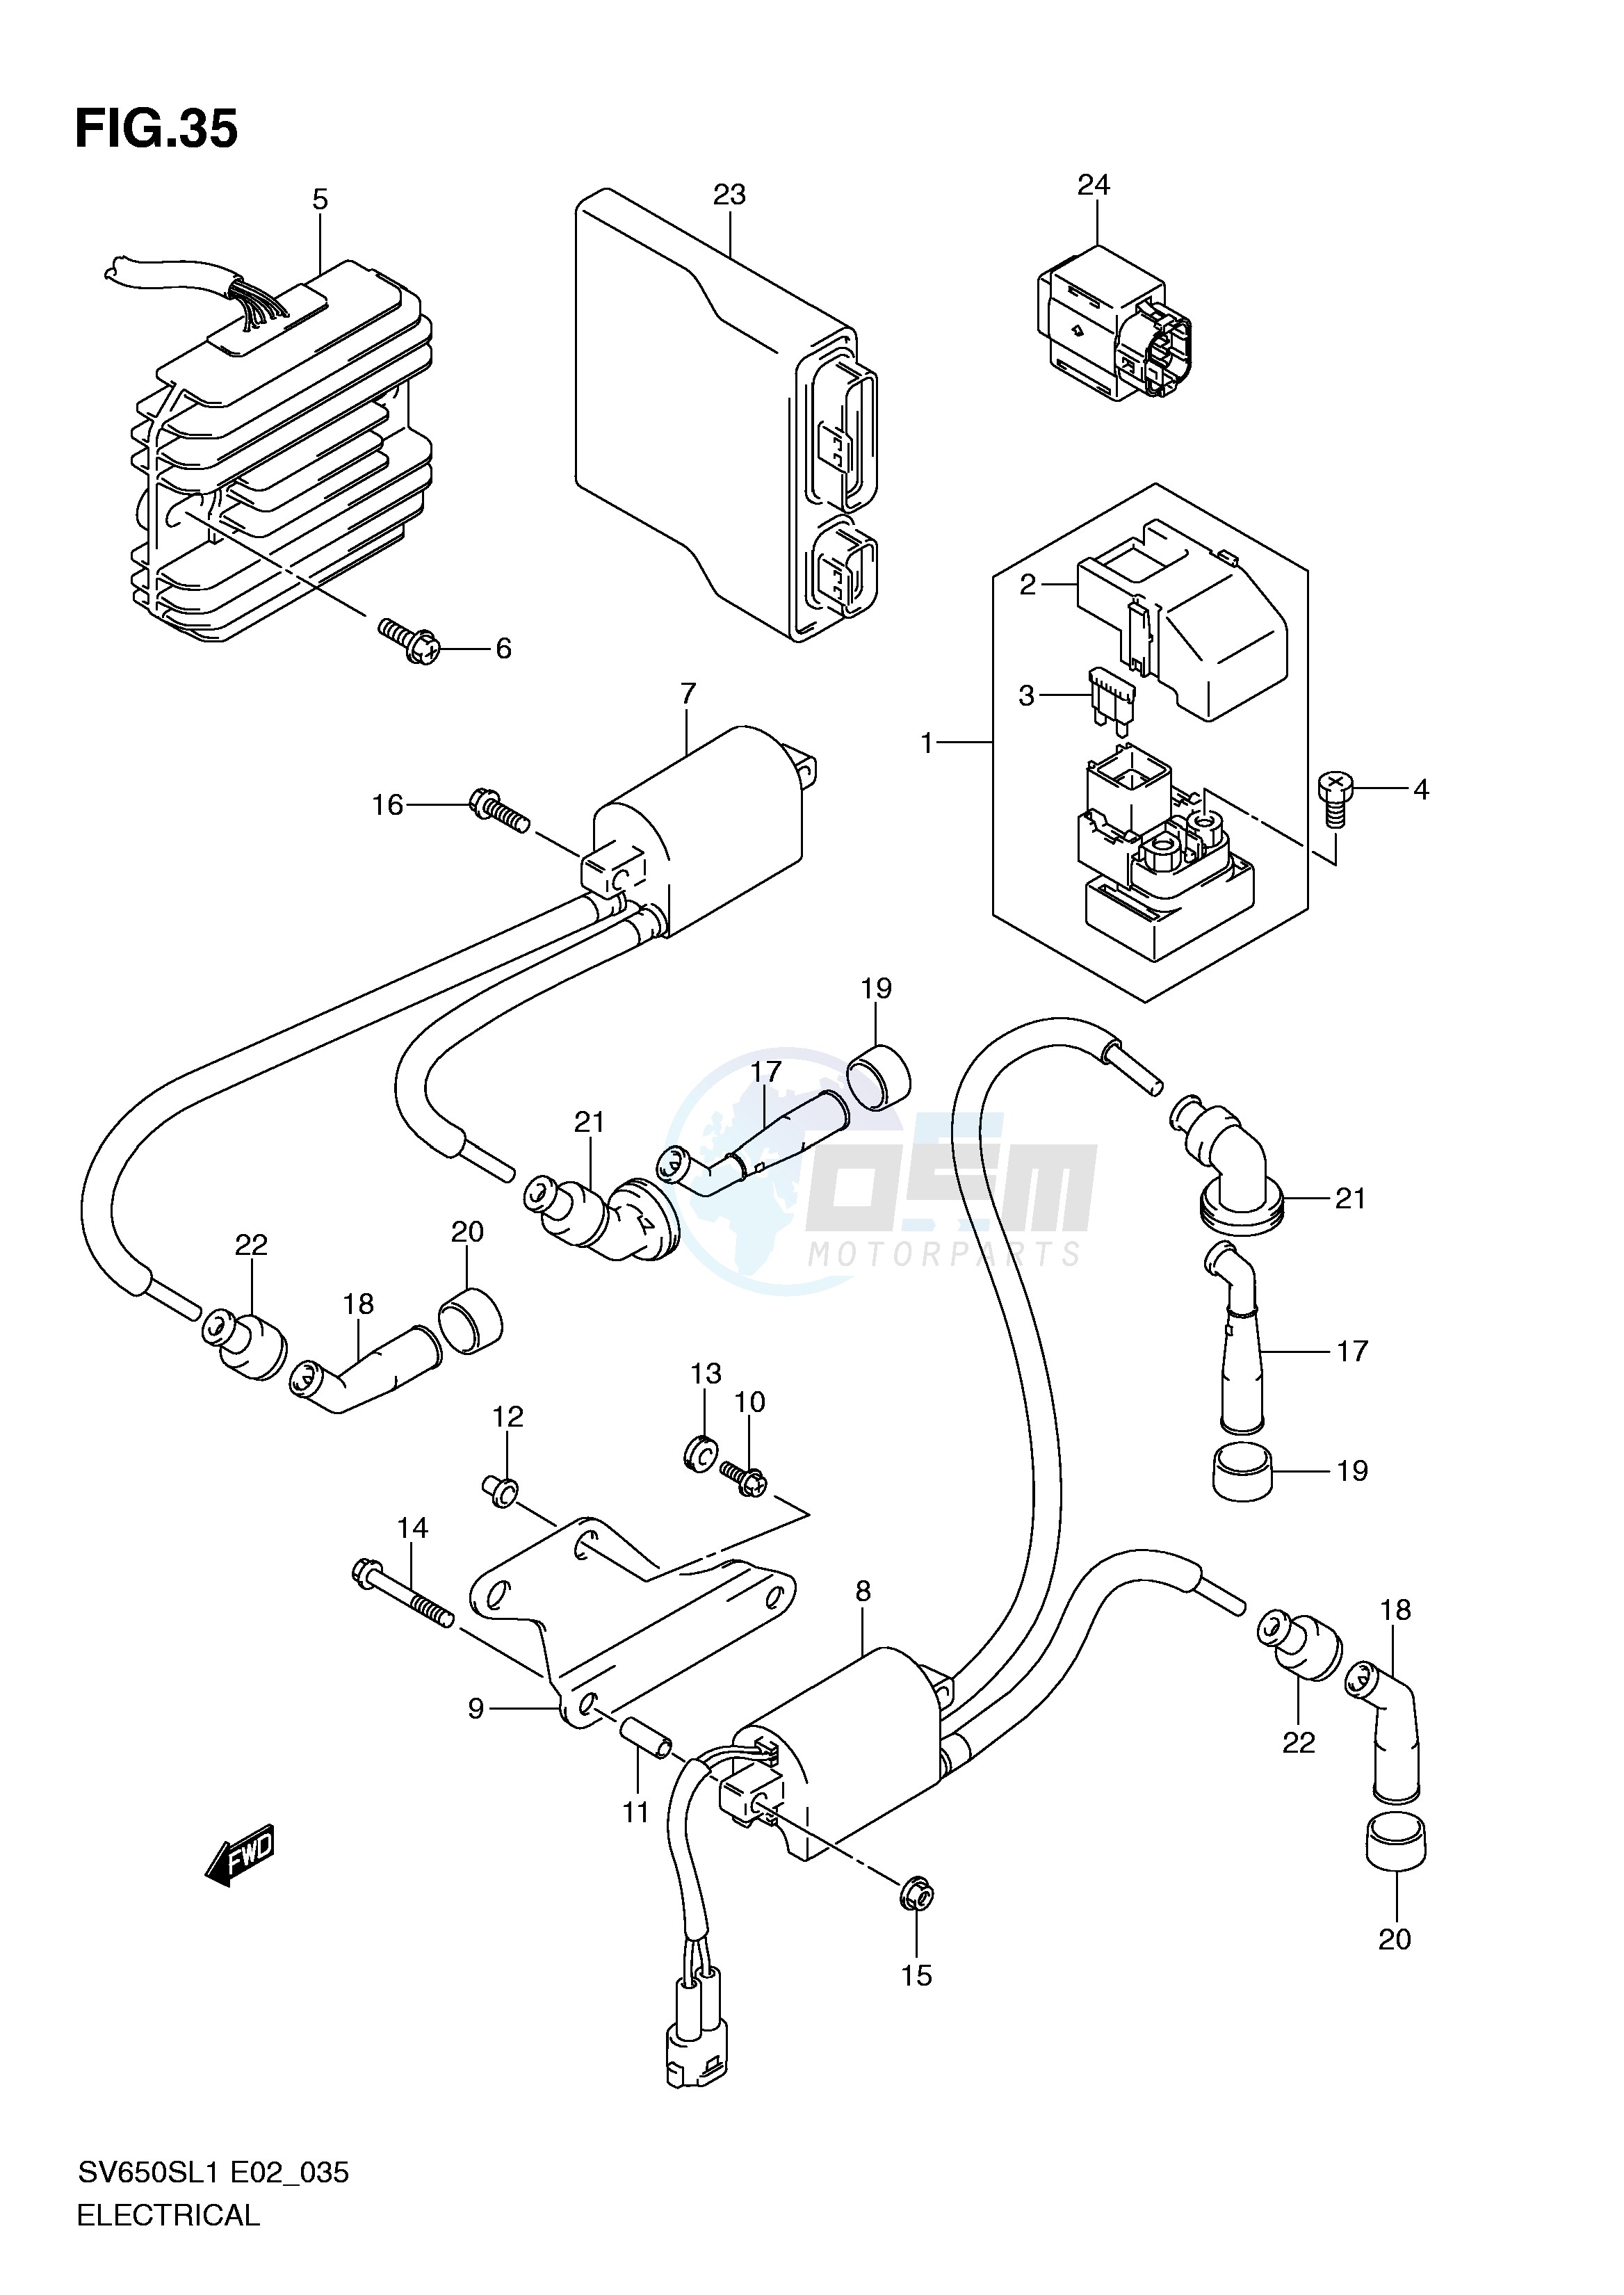 ELECTRICAL (SV650SL1 E24) blueprint